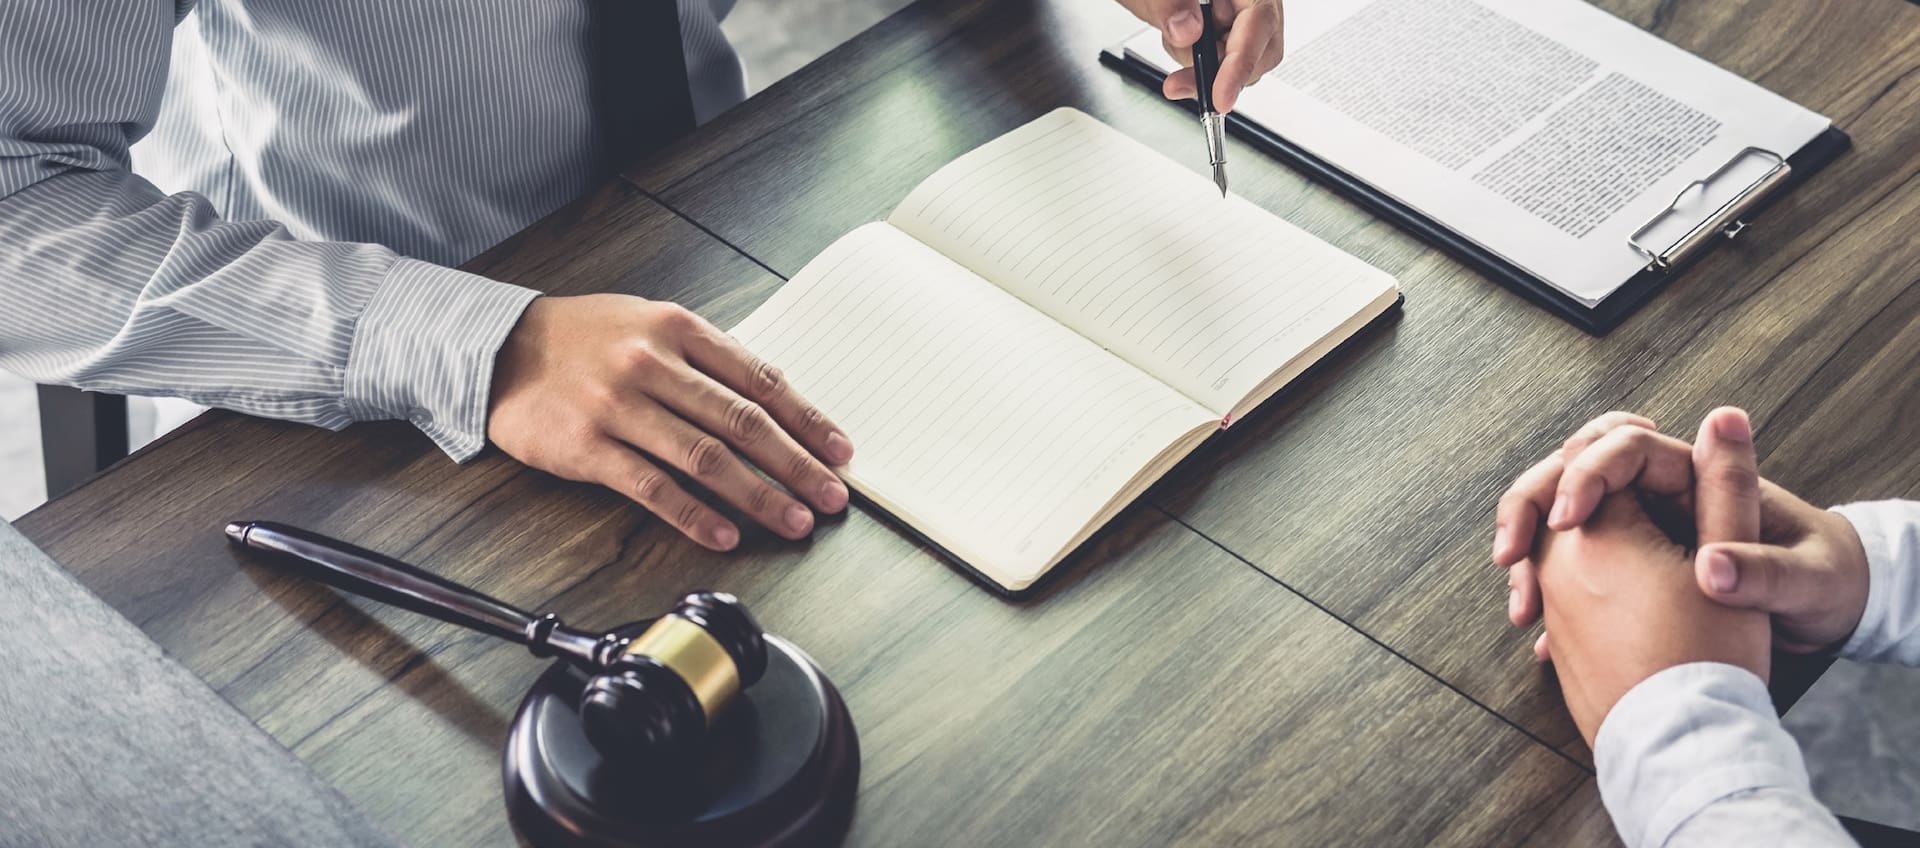 legal desk gavel notebook pen legal documents